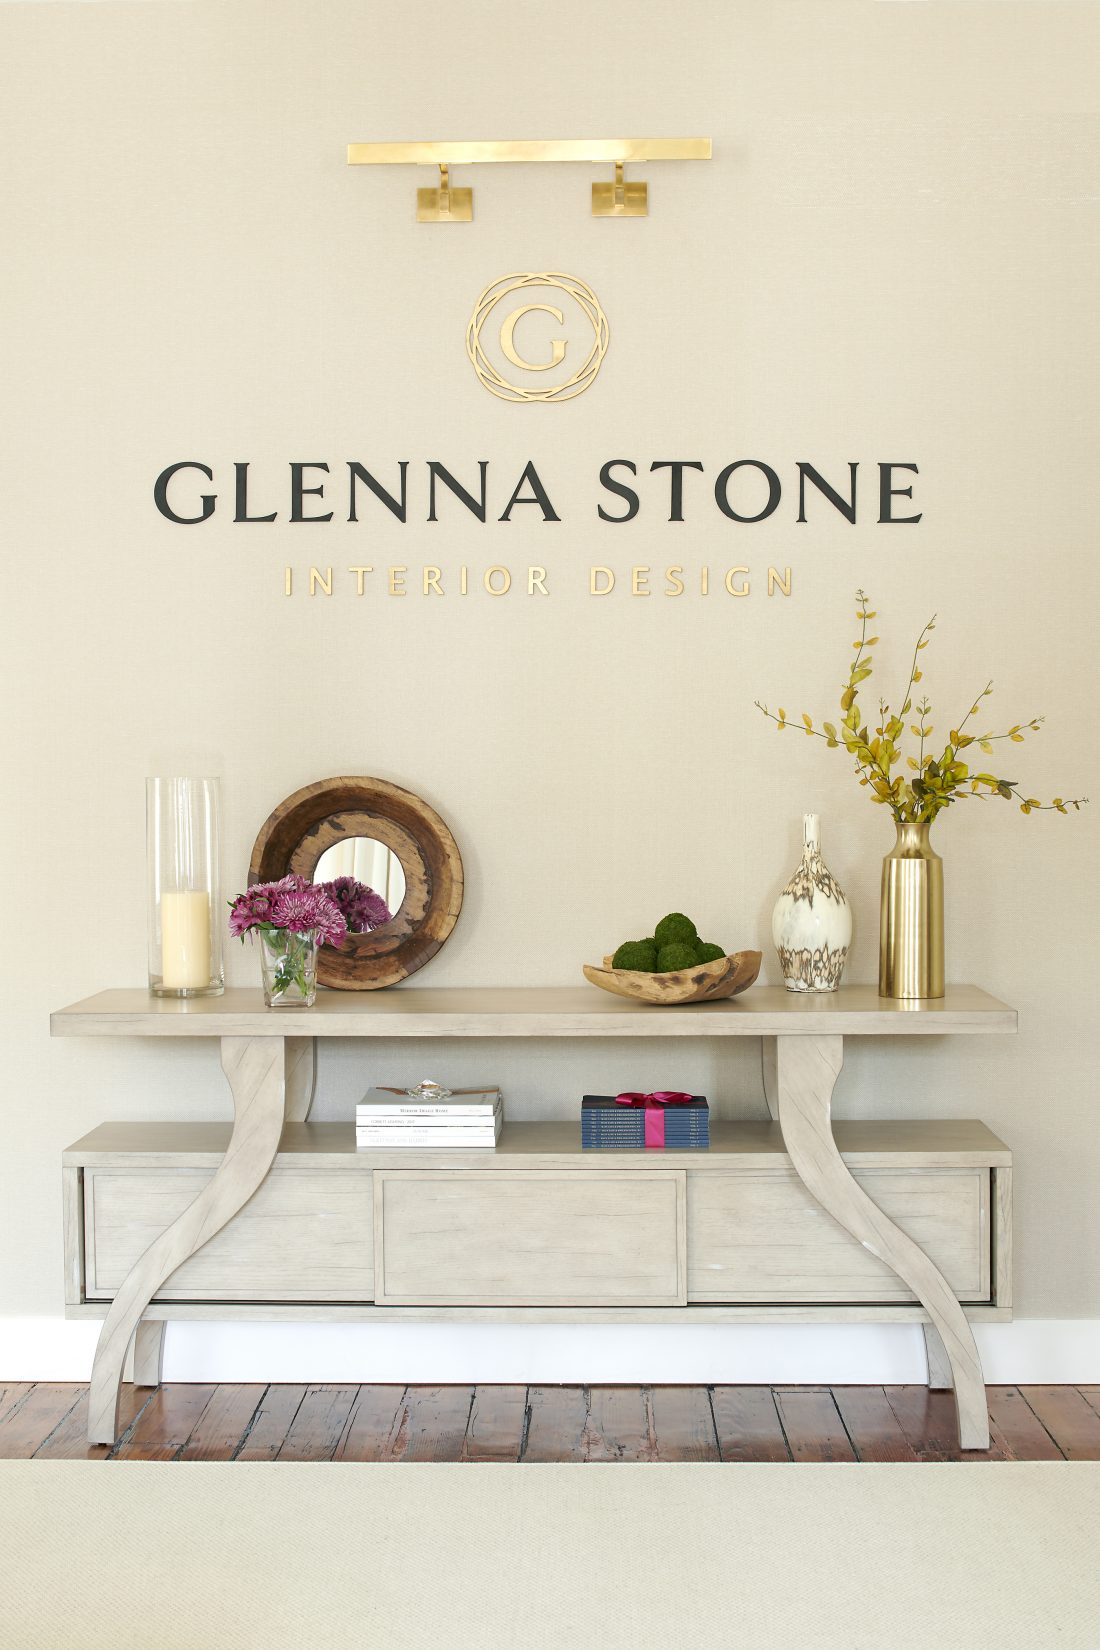 Our New Interior Design Showroom Reveal Glenna Stone